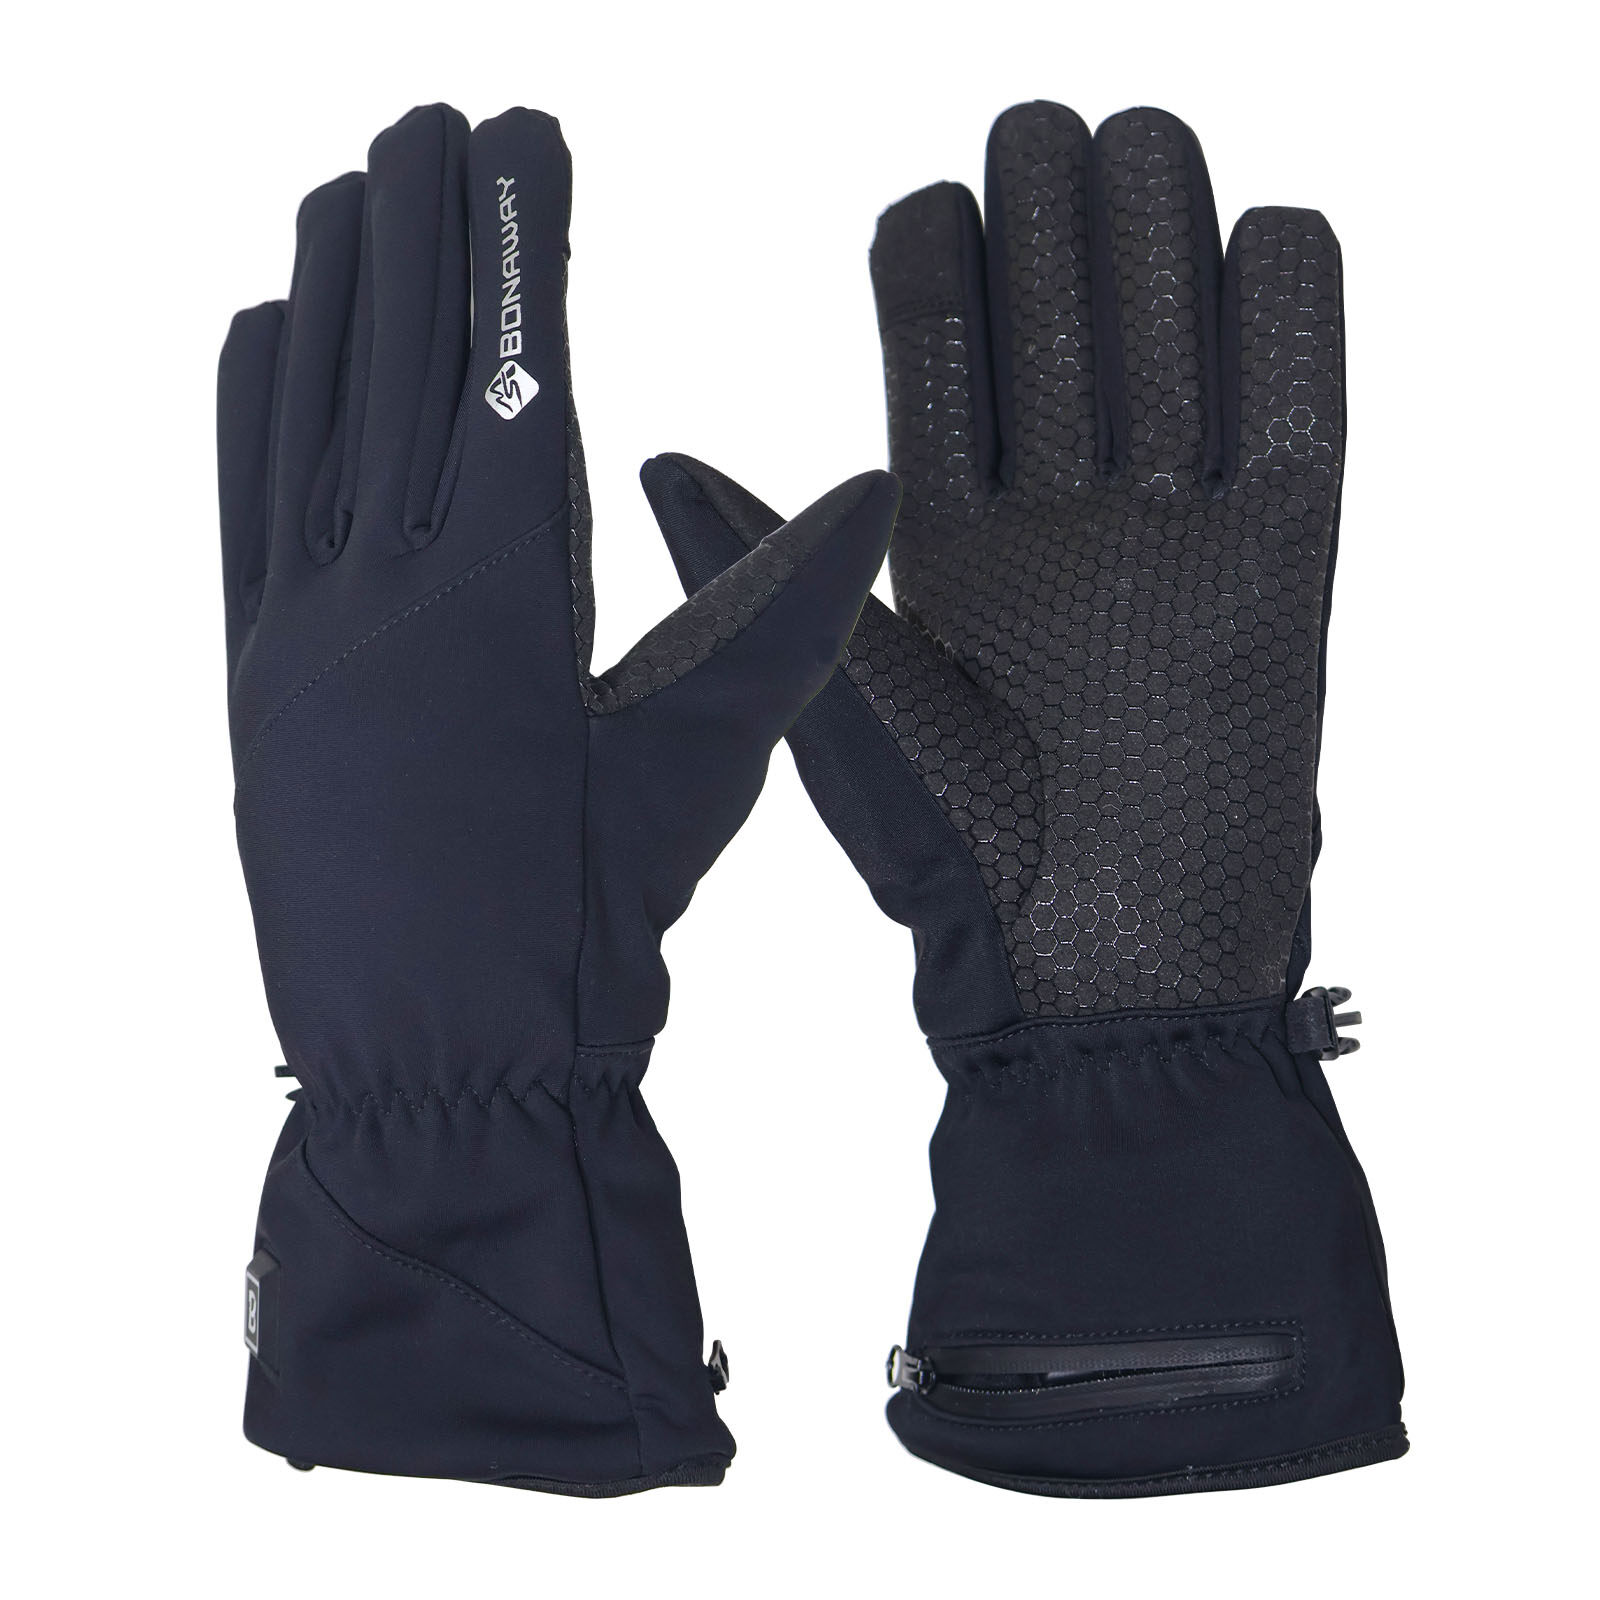 Lightweight heated gloves